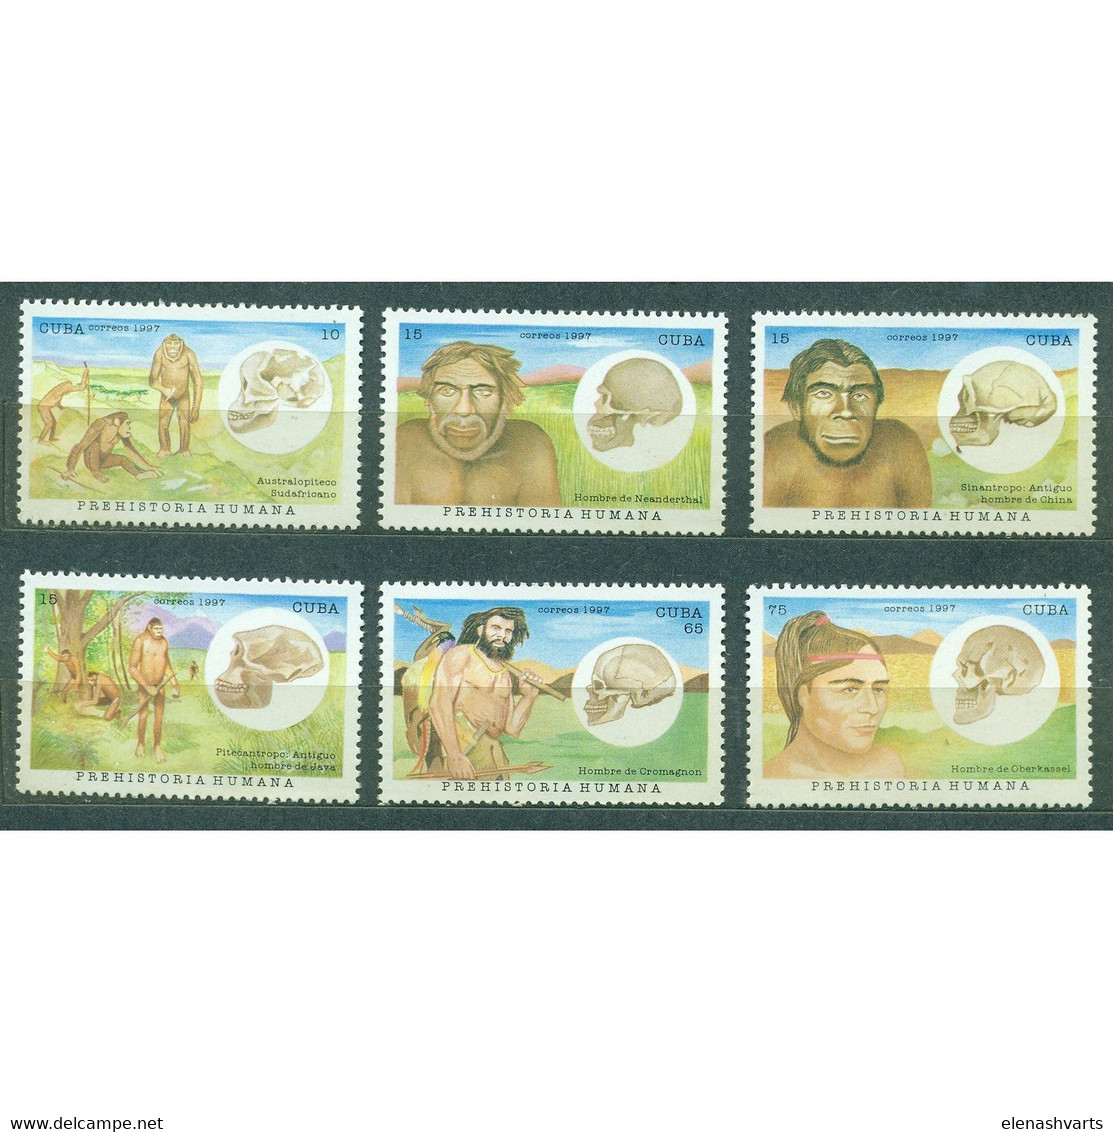 &#128681; Discount - Cuba 1997 Prehistoric Man  (MNH)  - Ancient People - Prehistorie